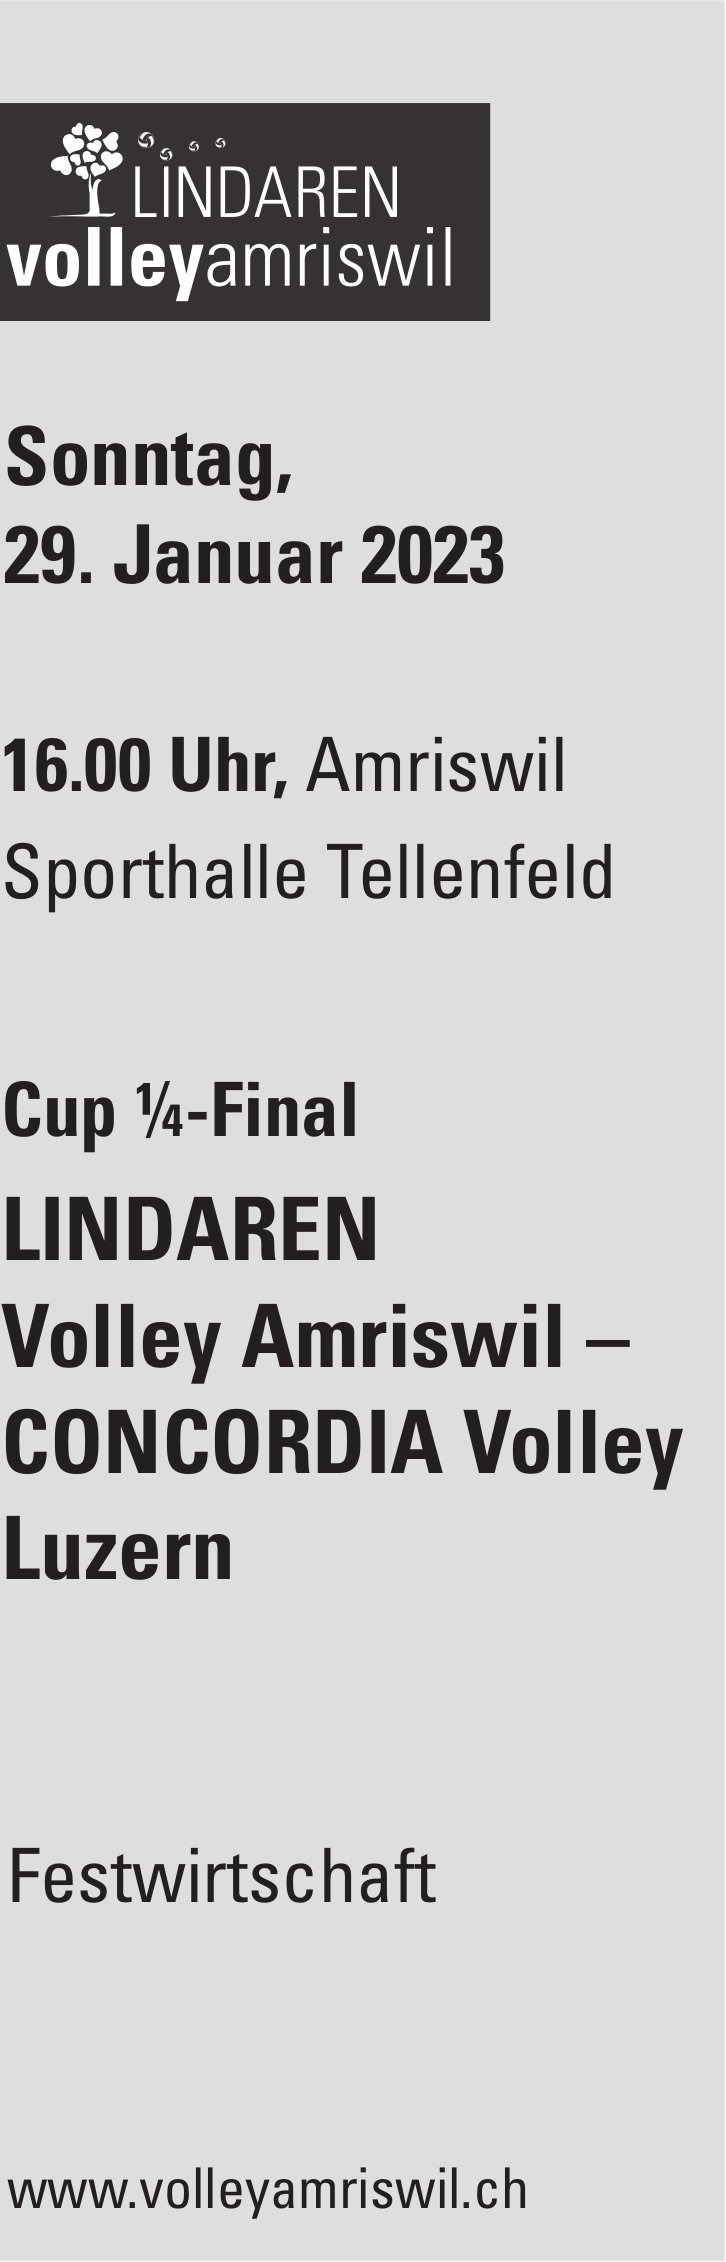 LINDAREN Volley Amriswil – CONCORDIA Volley Luzern, 29. Januar